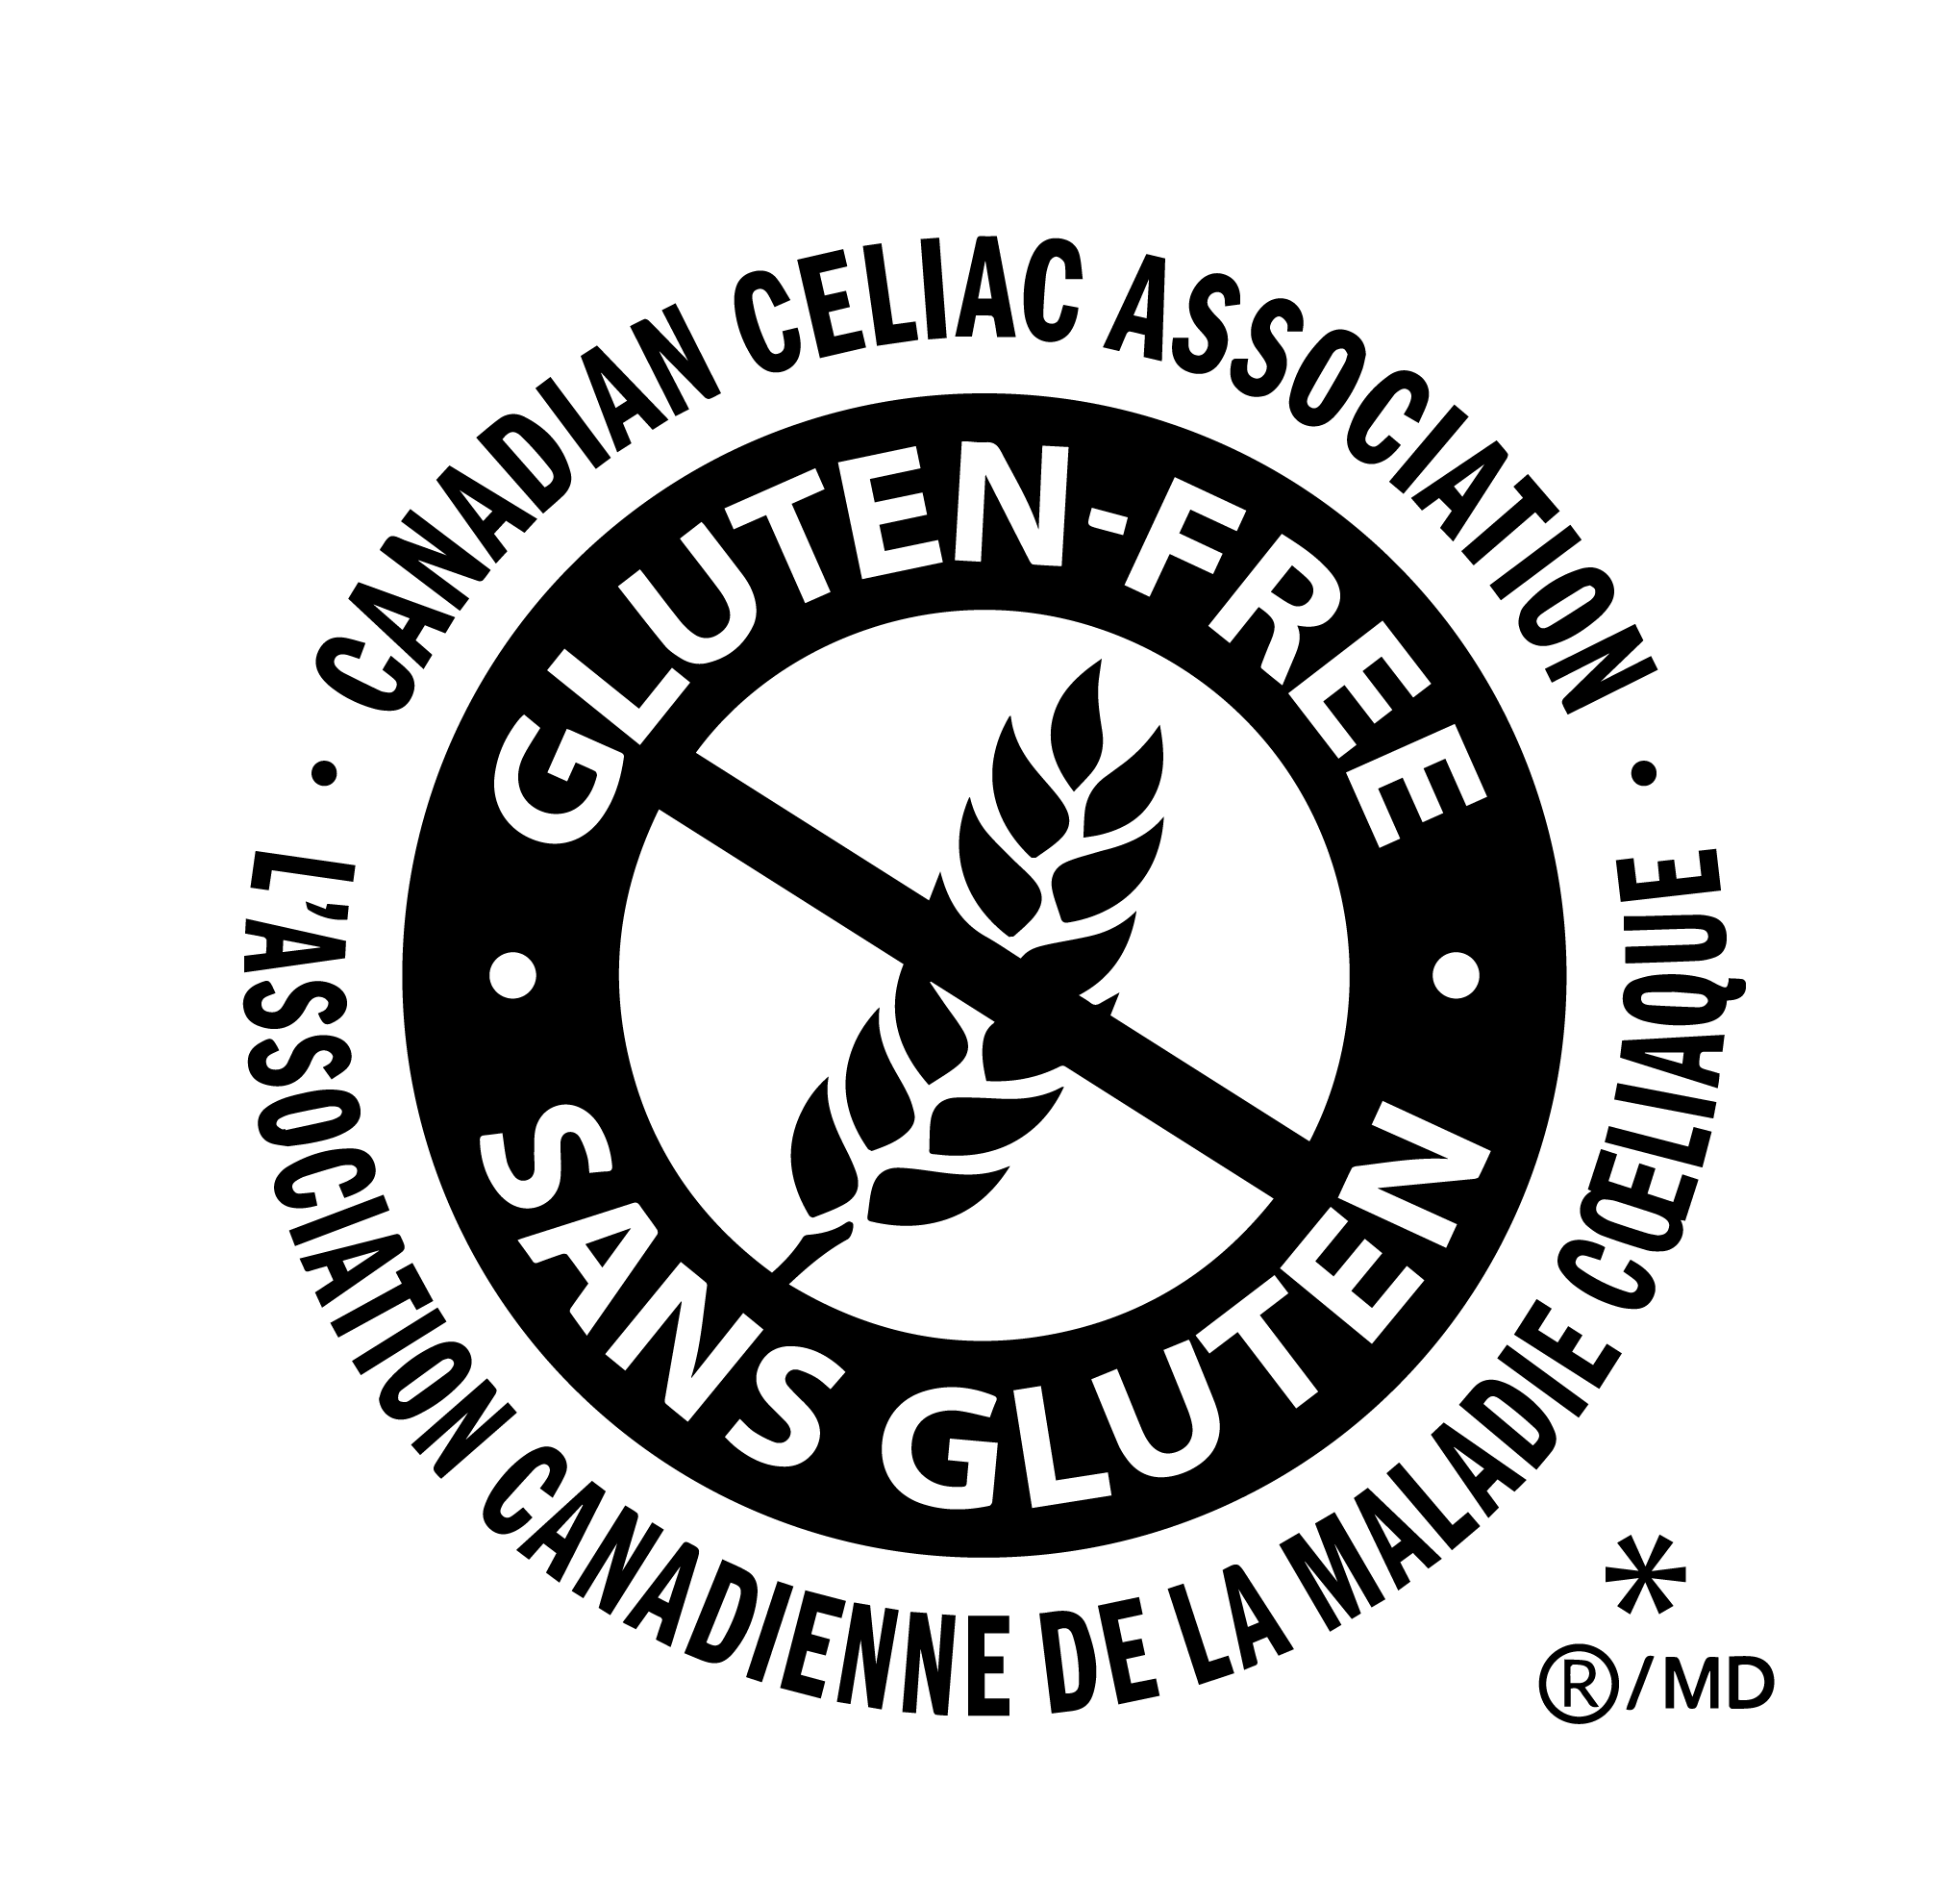 Canadian Celiac Association - Gluten Free